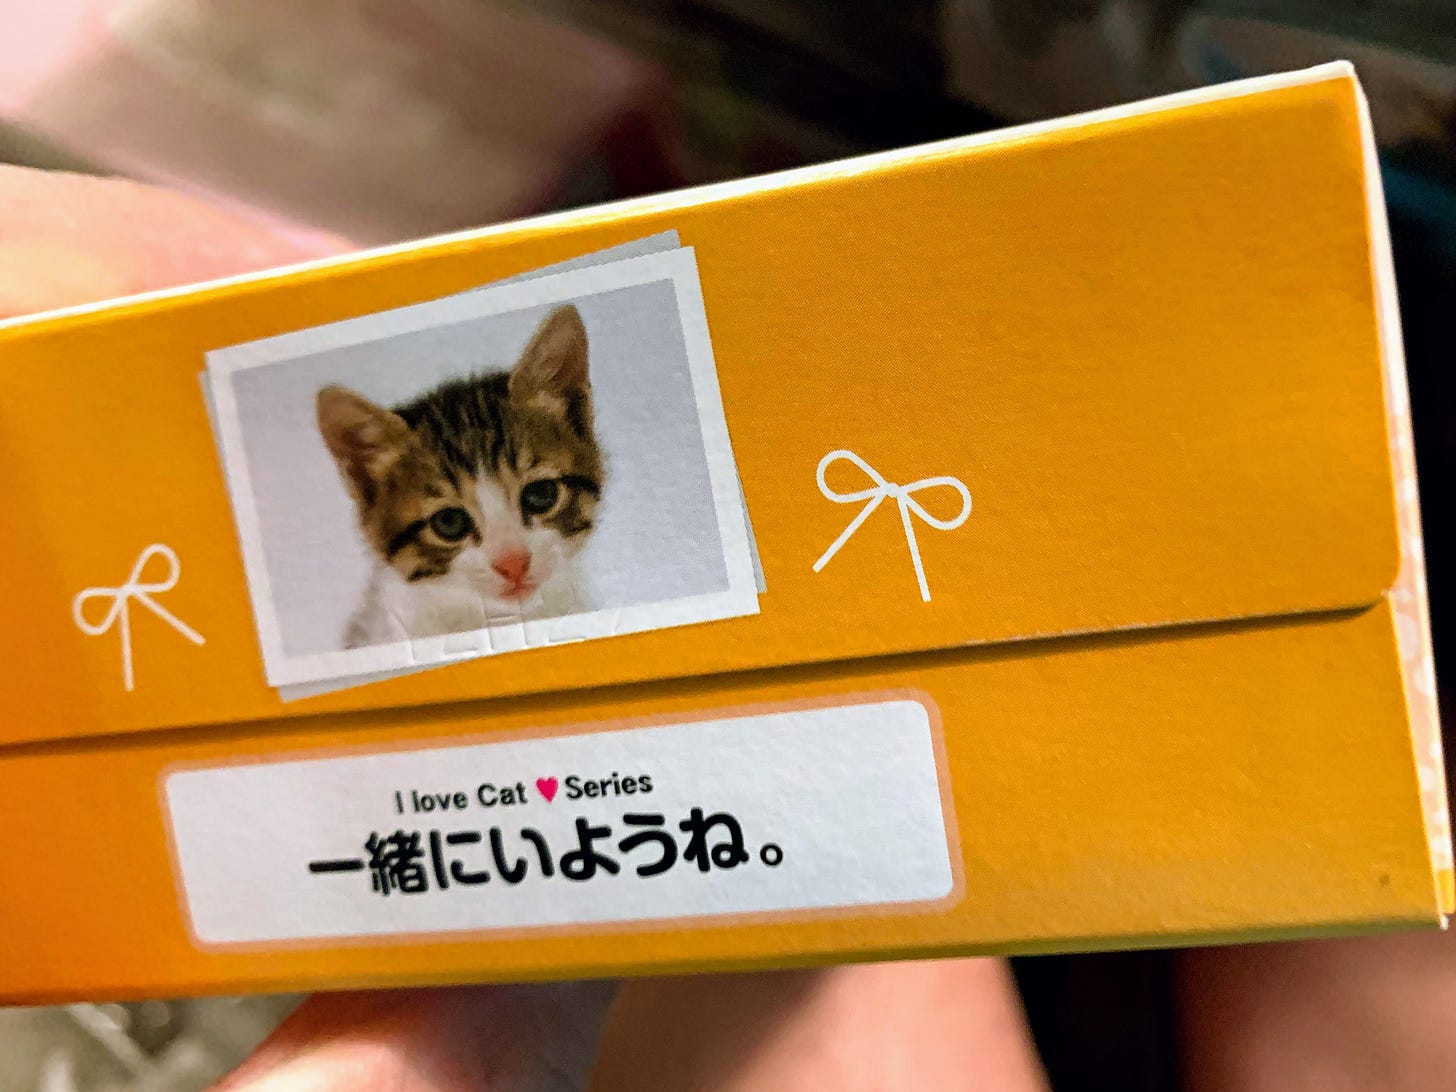 Japanese tissue Box with Kitten Photo